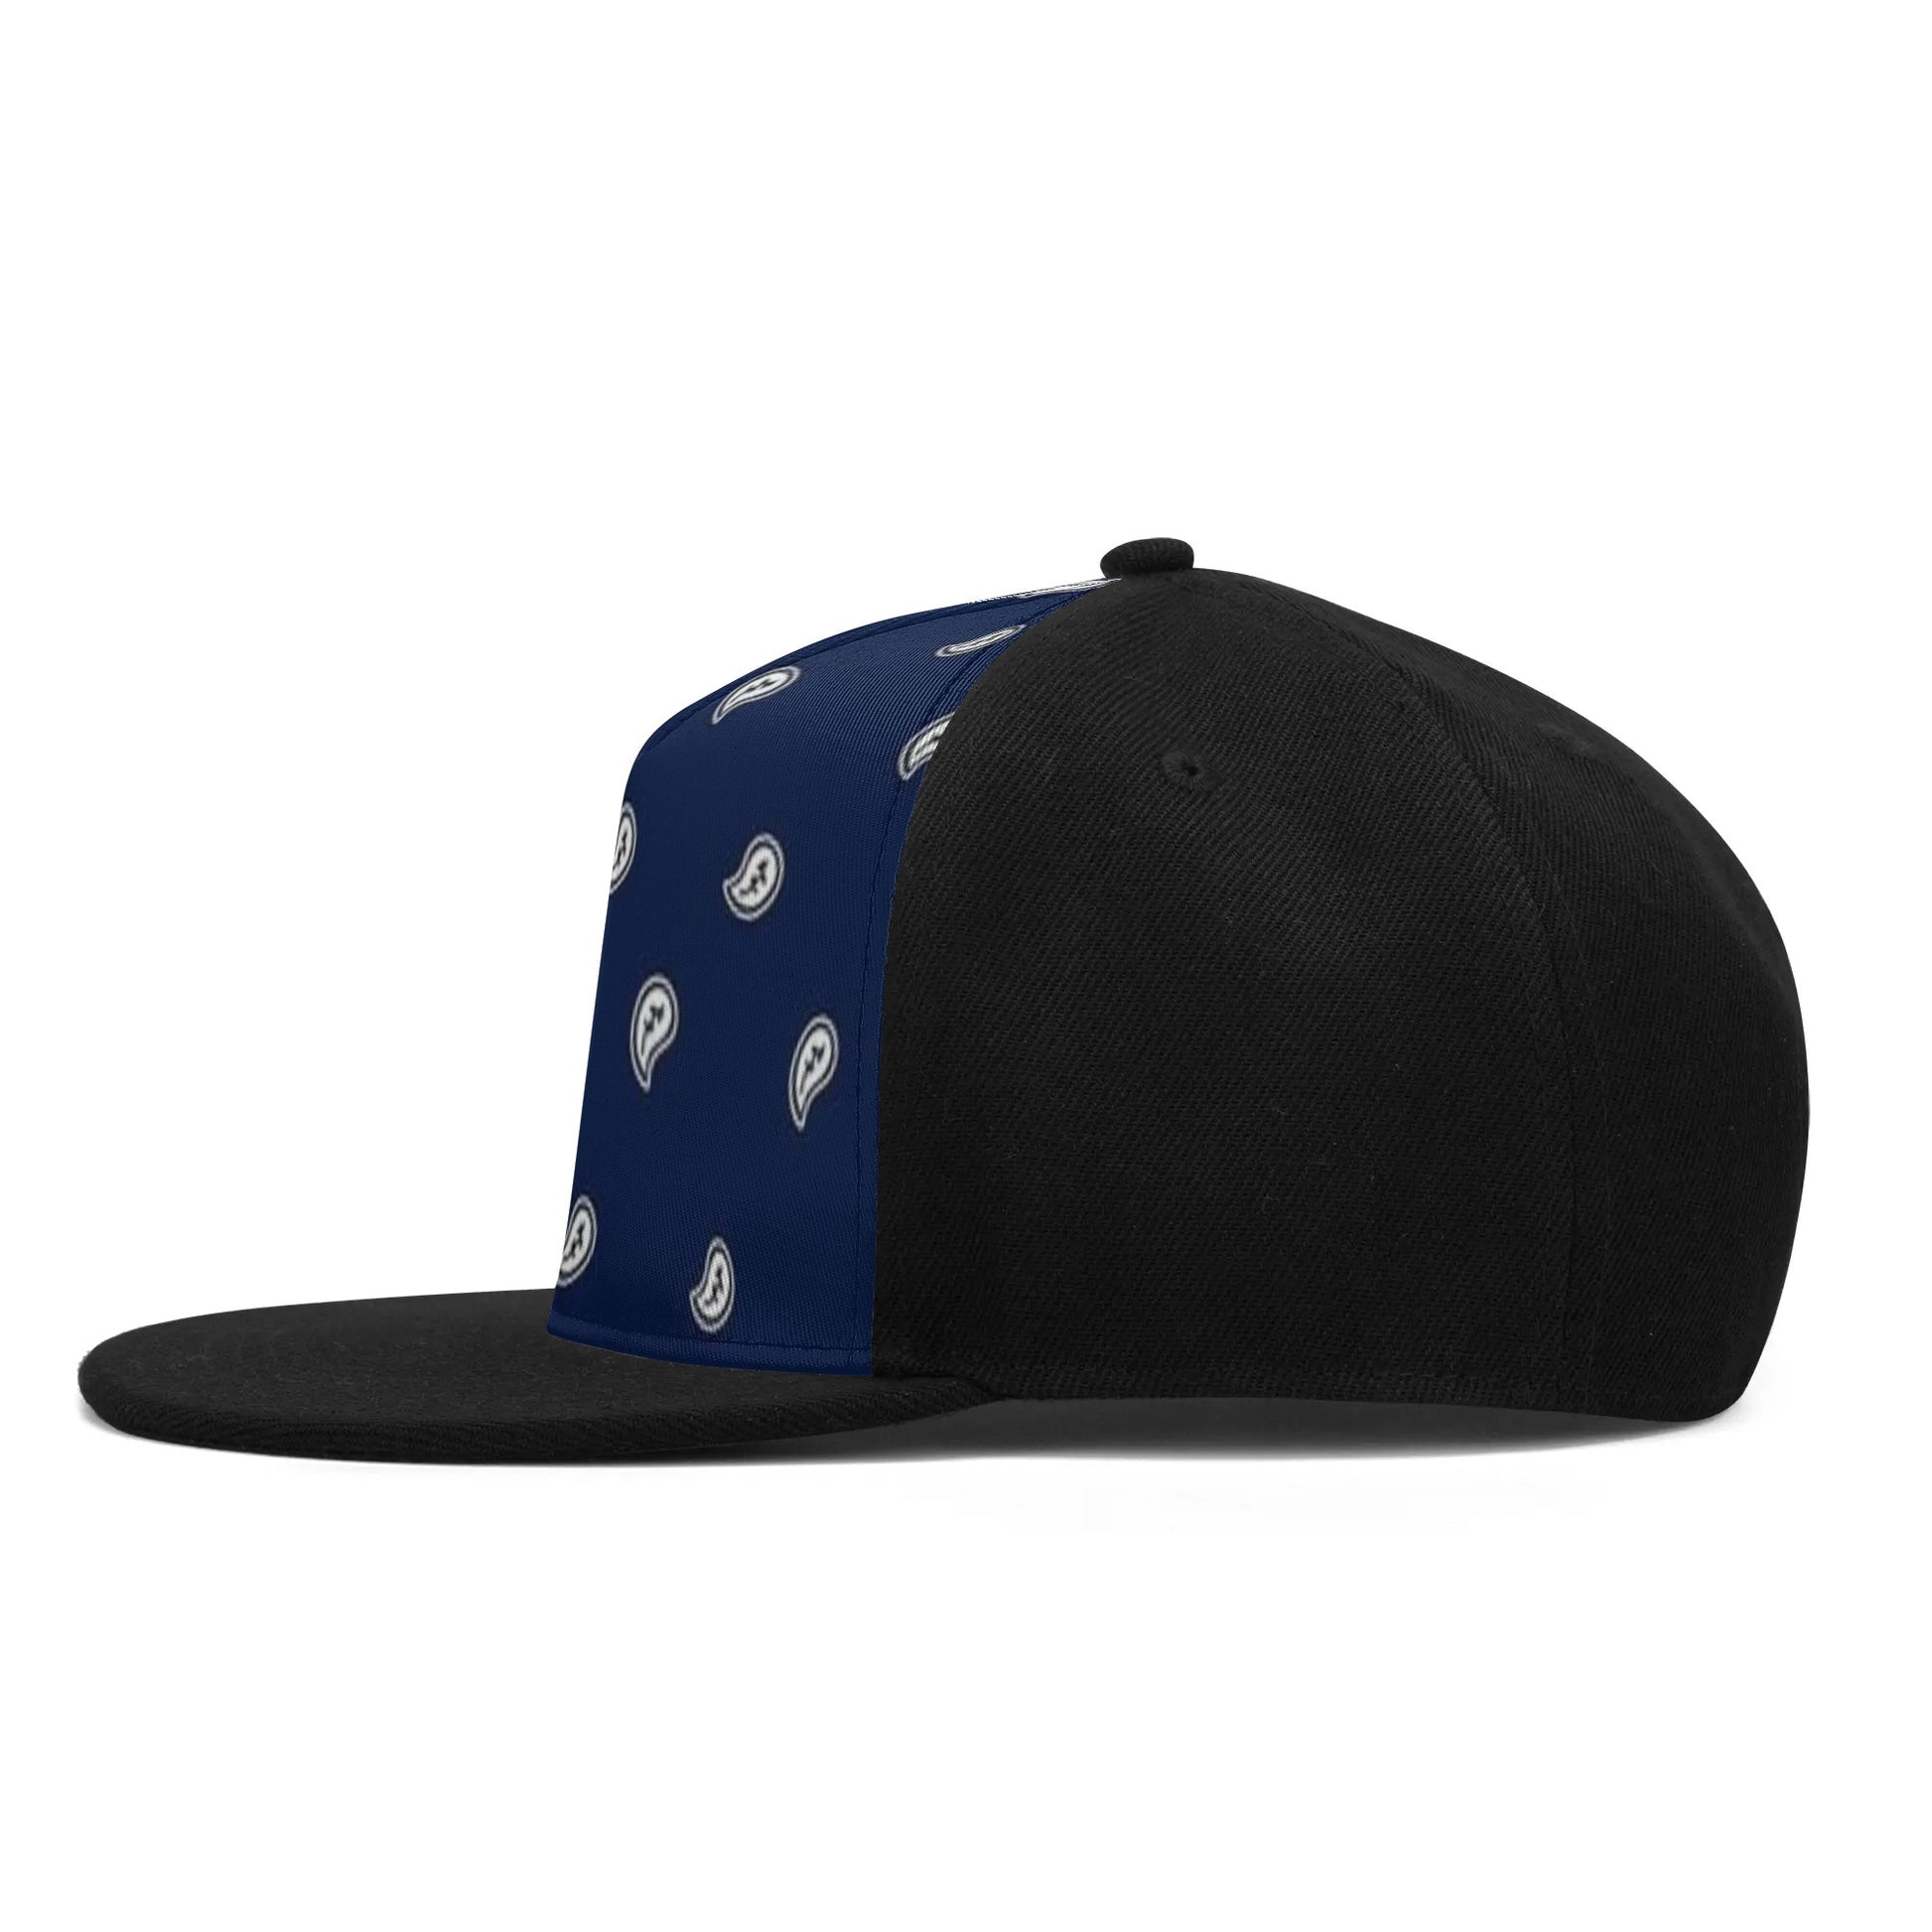 Blue Bandana Snapback Hat